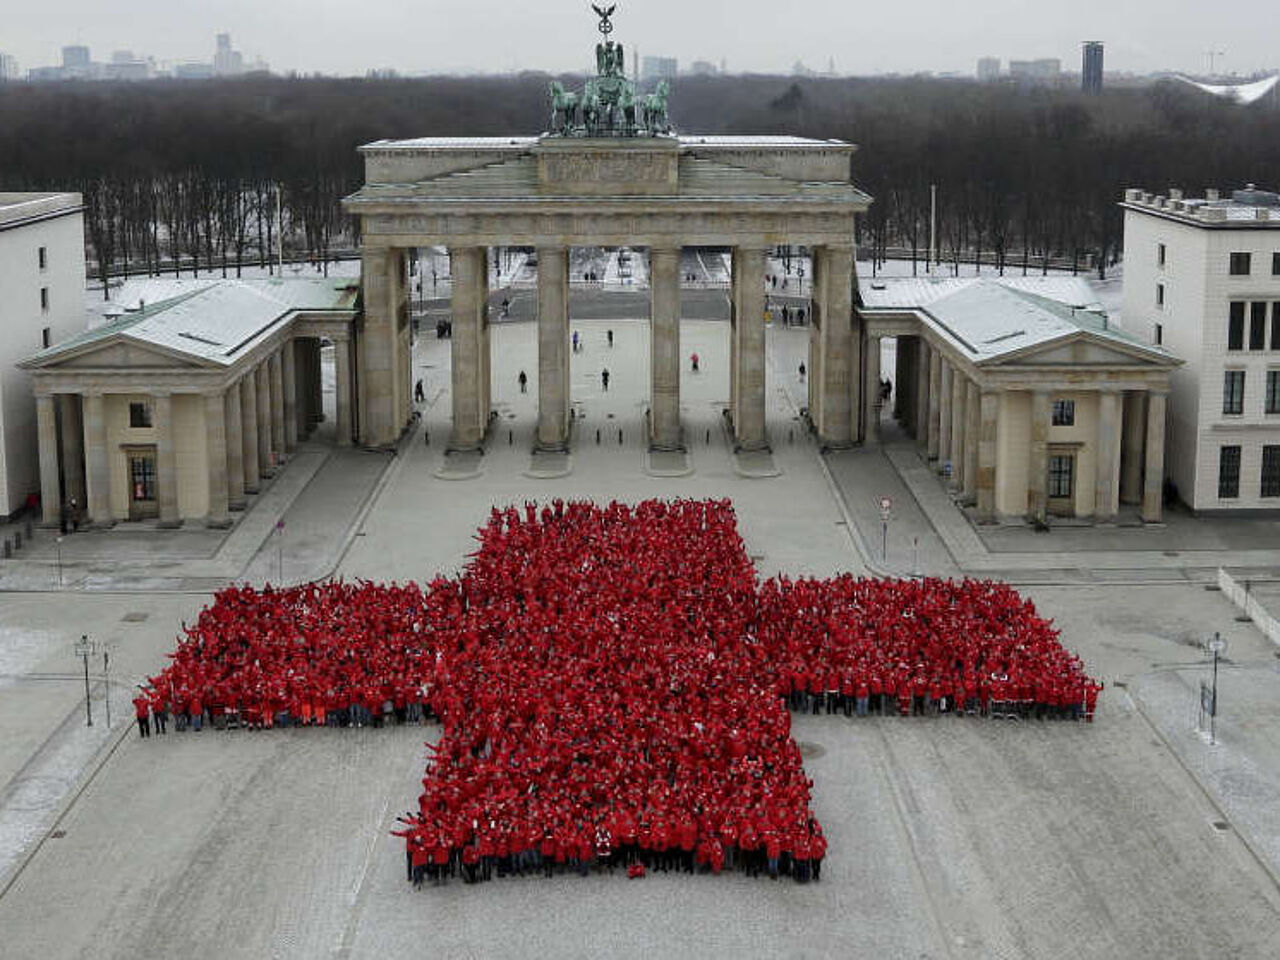 Jubiläum 150 Jahre DRK: Rotes Kreuz vor dem Brandenburger Tor i